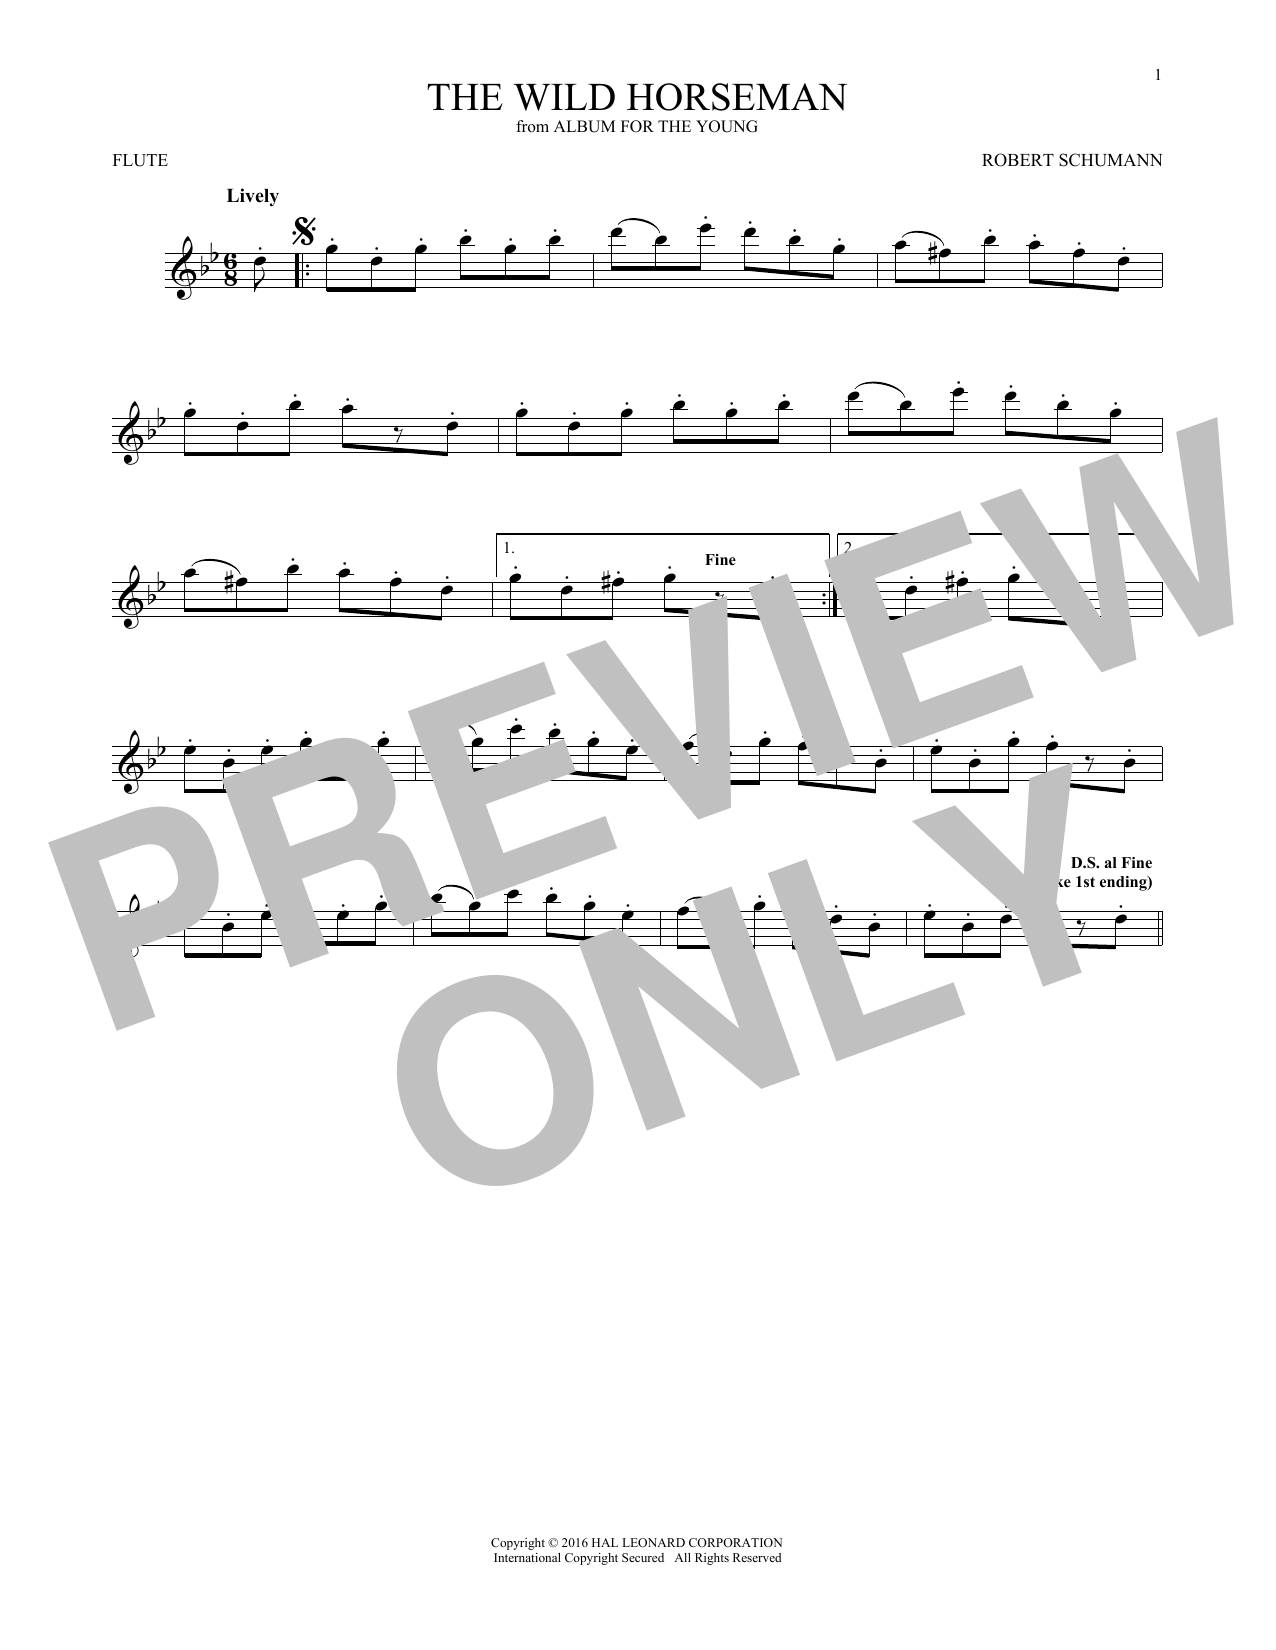 Robert Schumann The Wild Horseman (Wilder Reiter), Op. 68, No. 8 Sheet Music Notes & Chords for Cello - Download or Print PDF